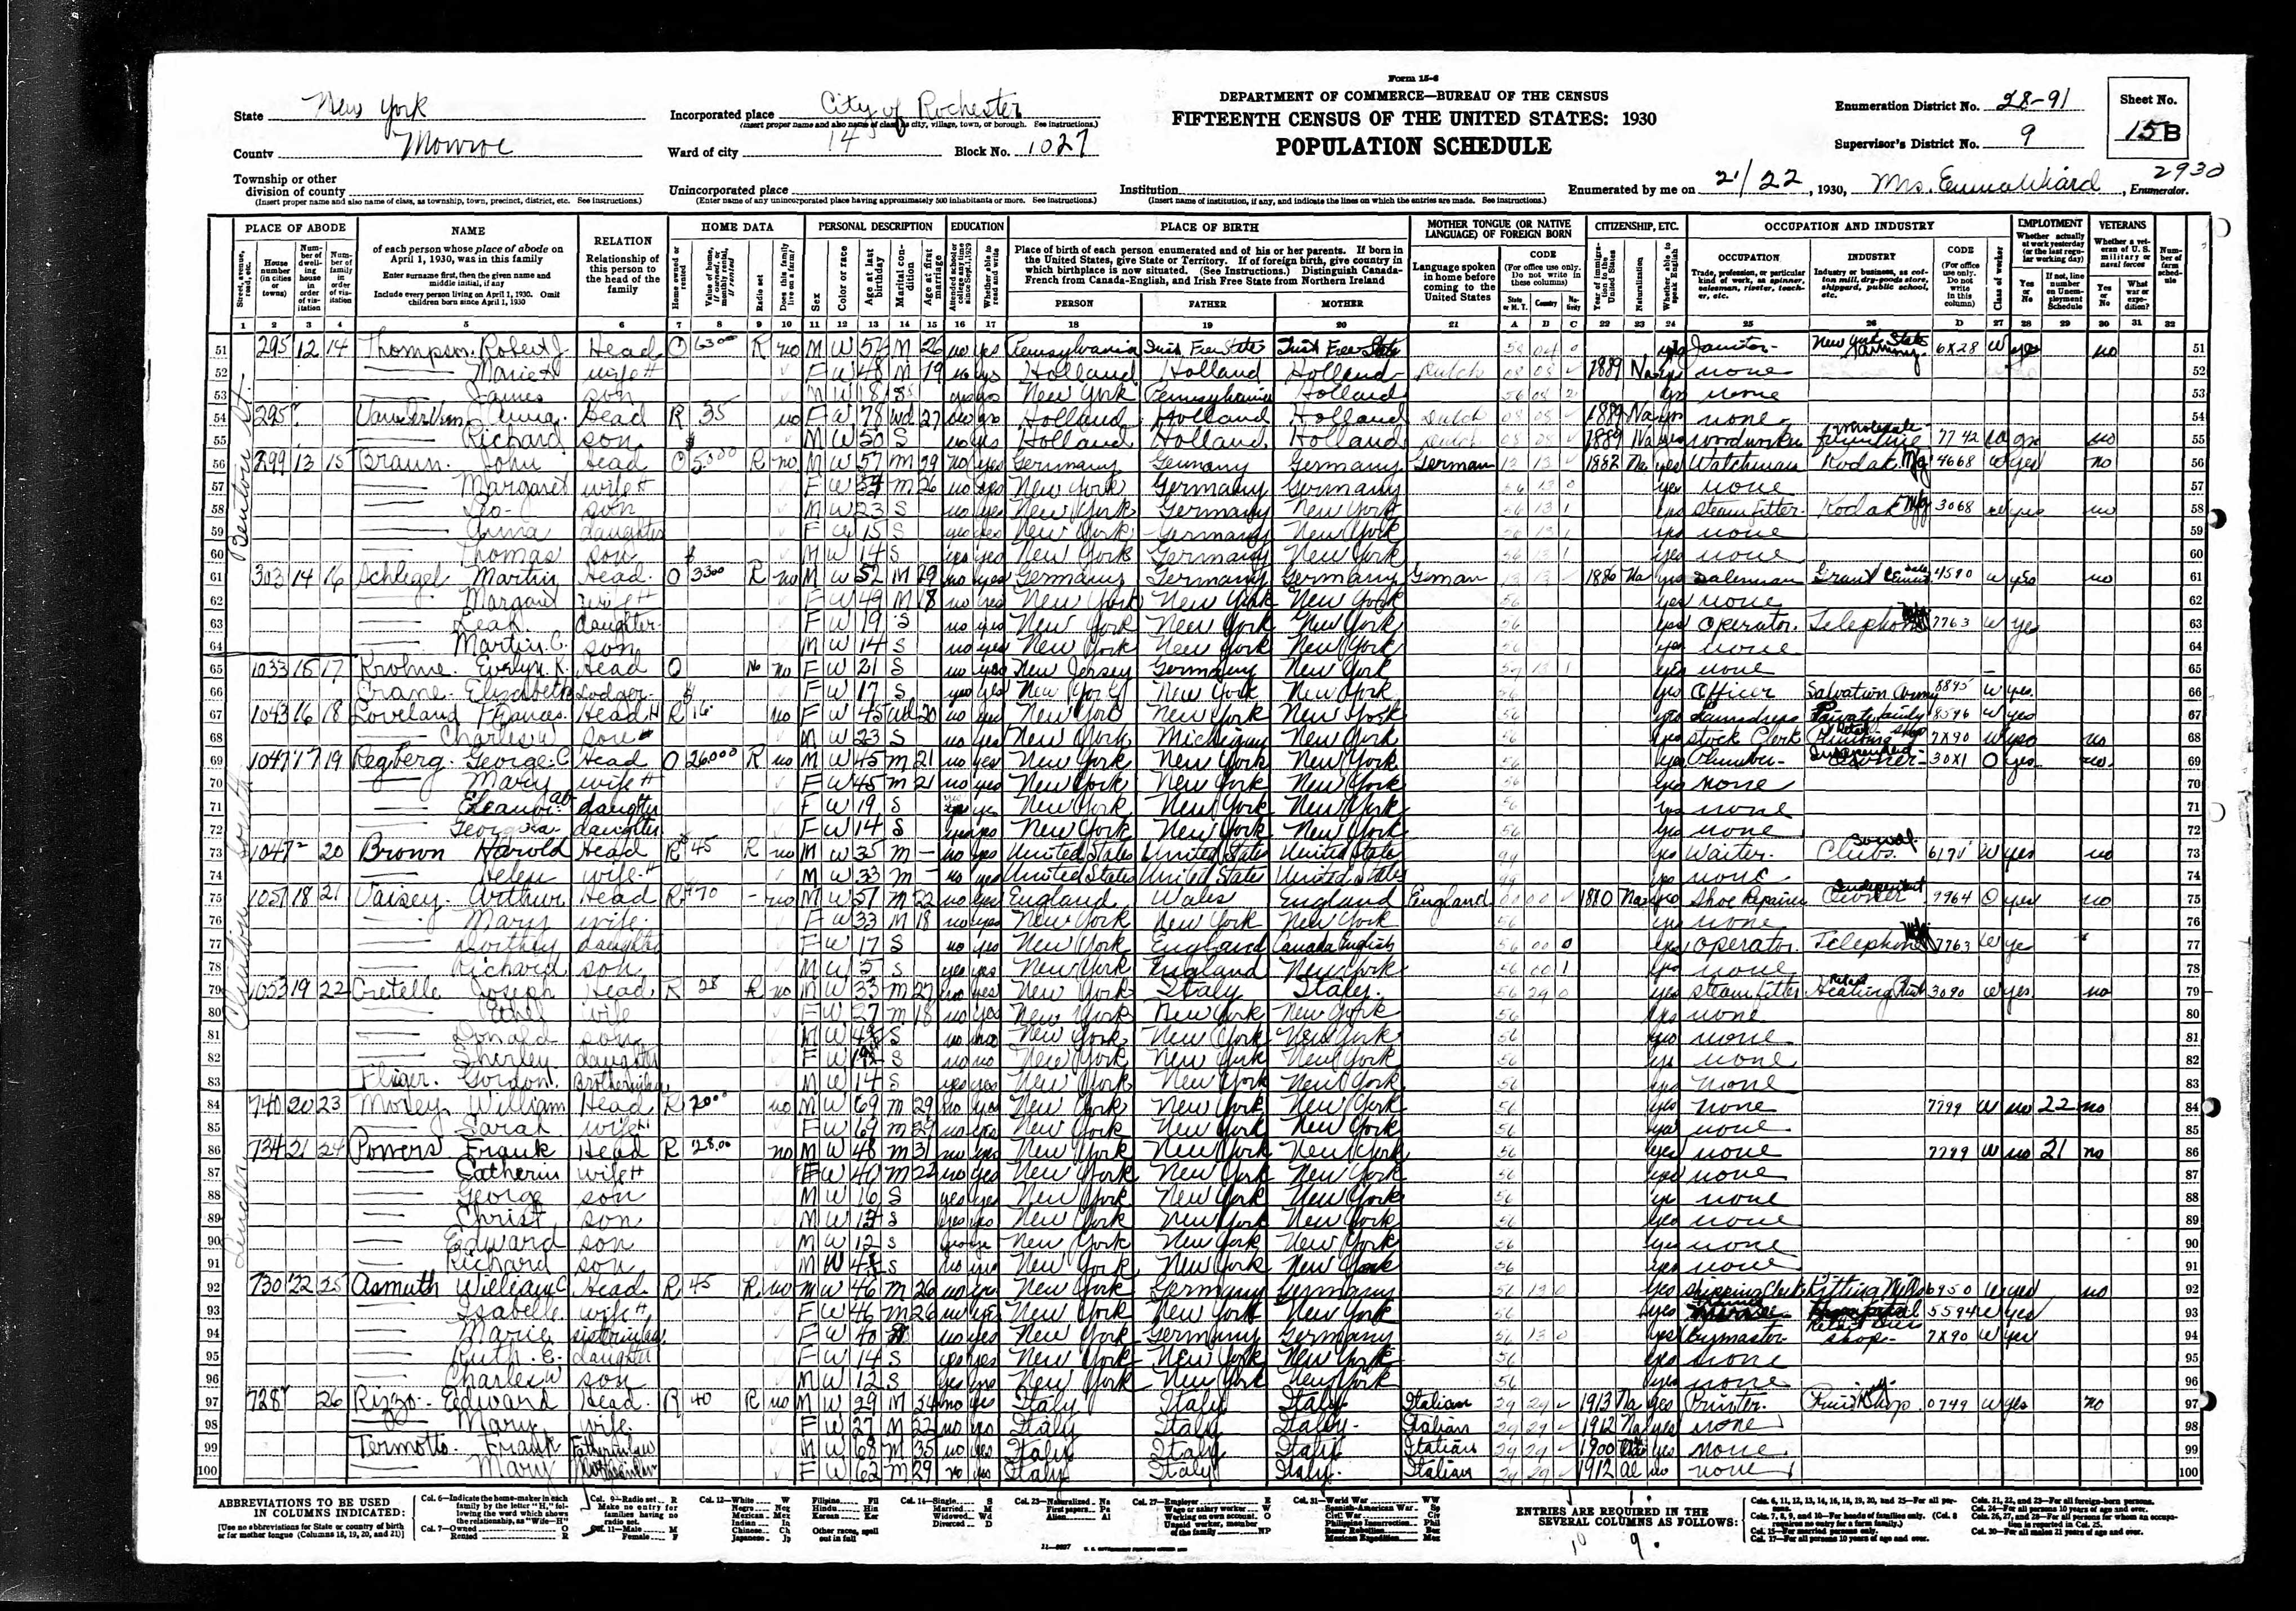 1930 Census, Richard Vaisey, line 78